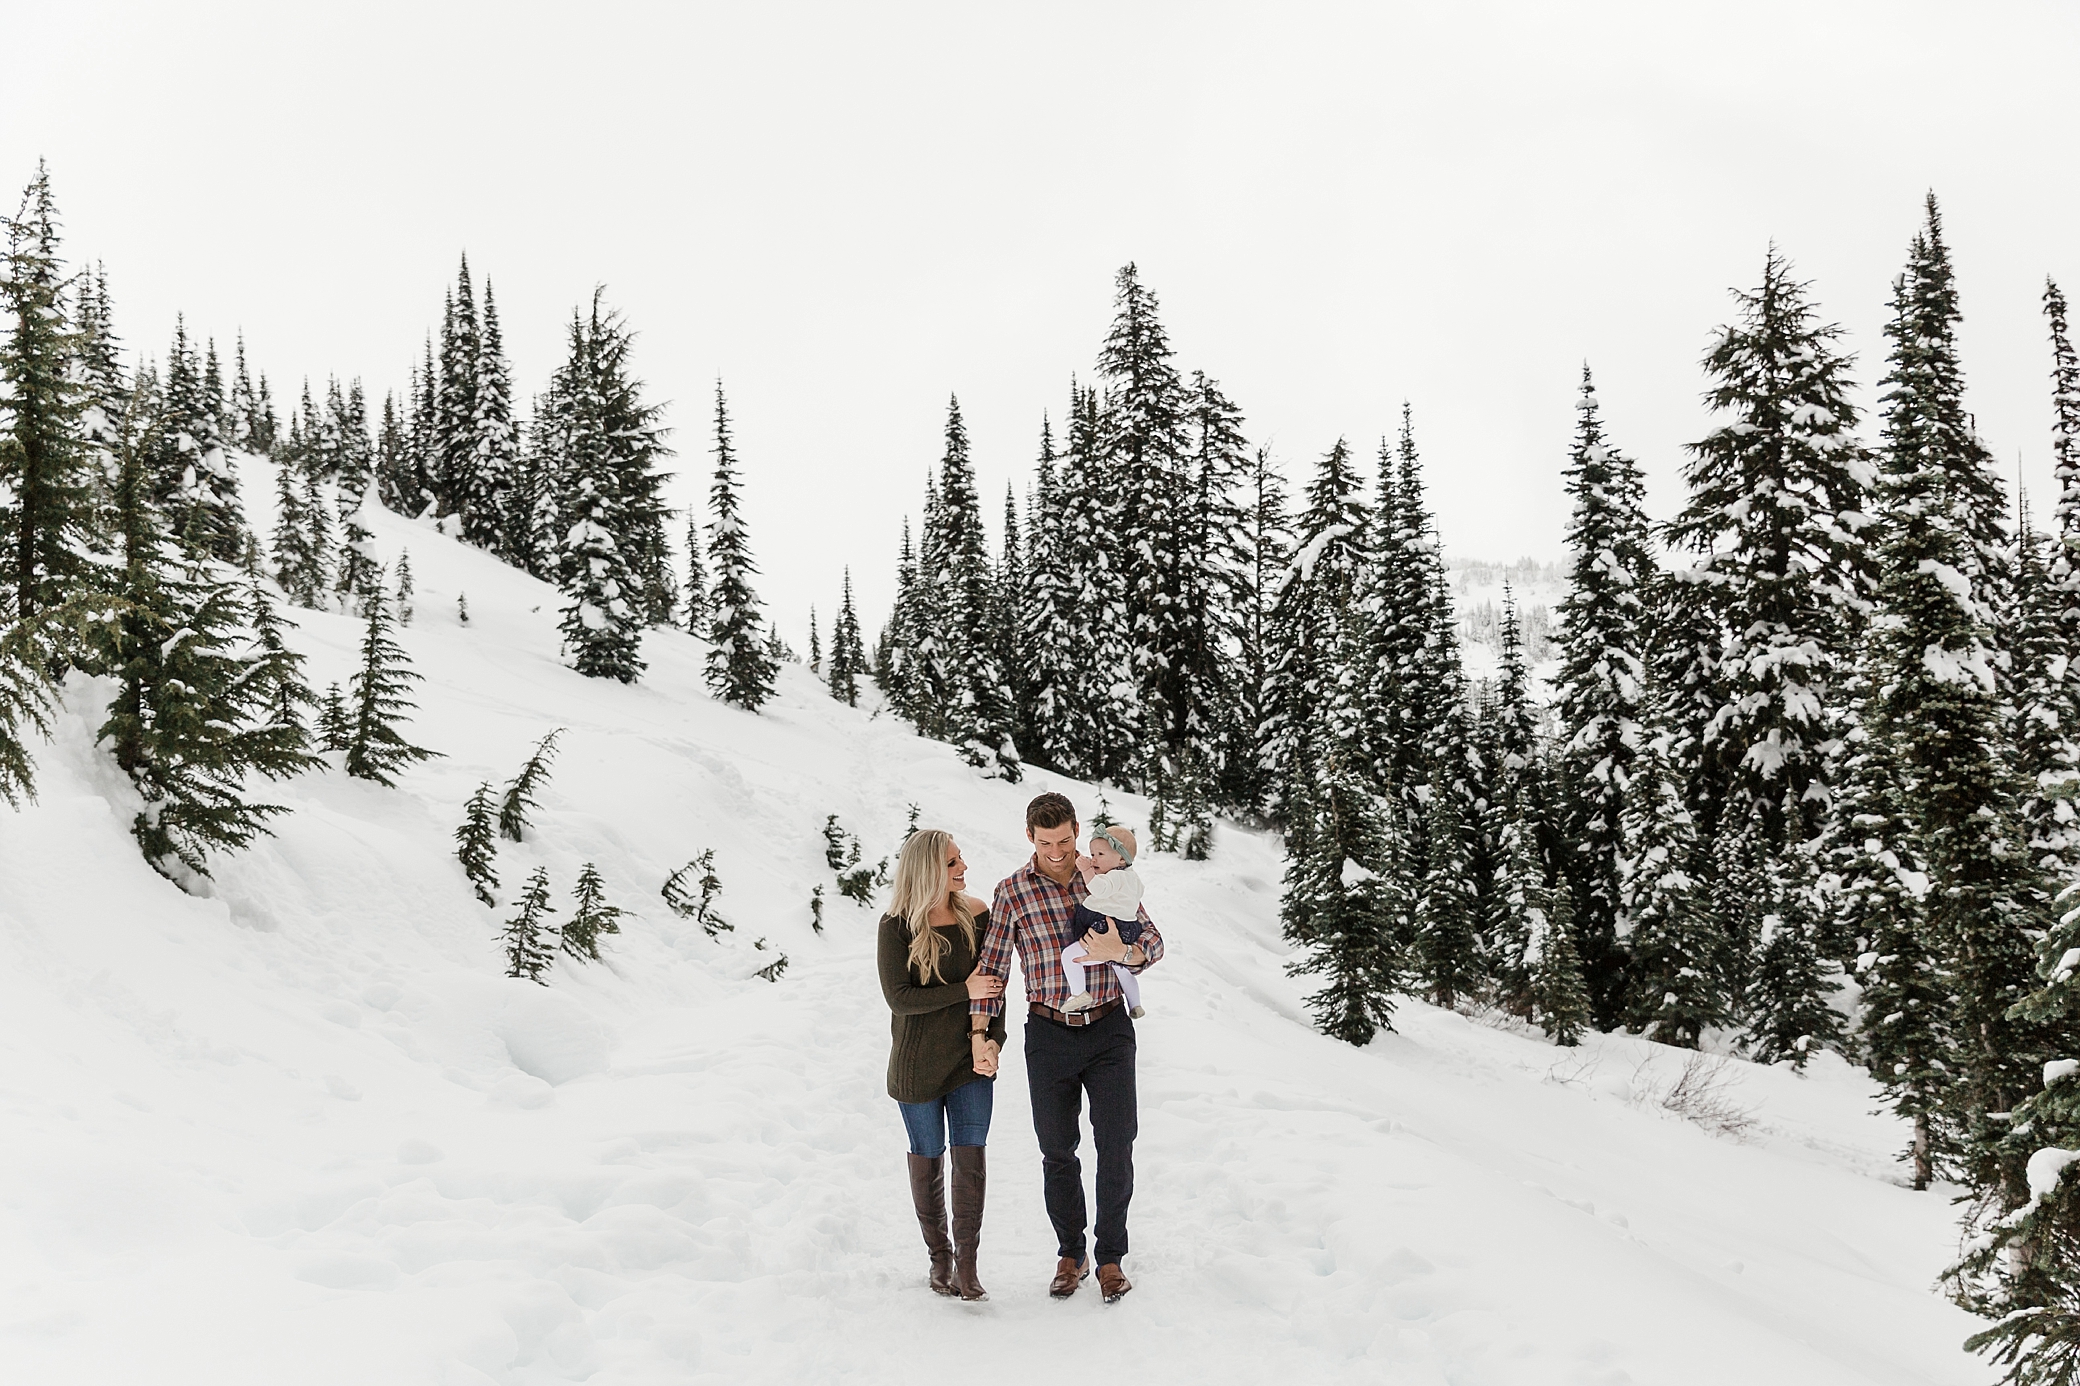 Snowy Mountain Photos with Family | Megan Montalvo Photography 